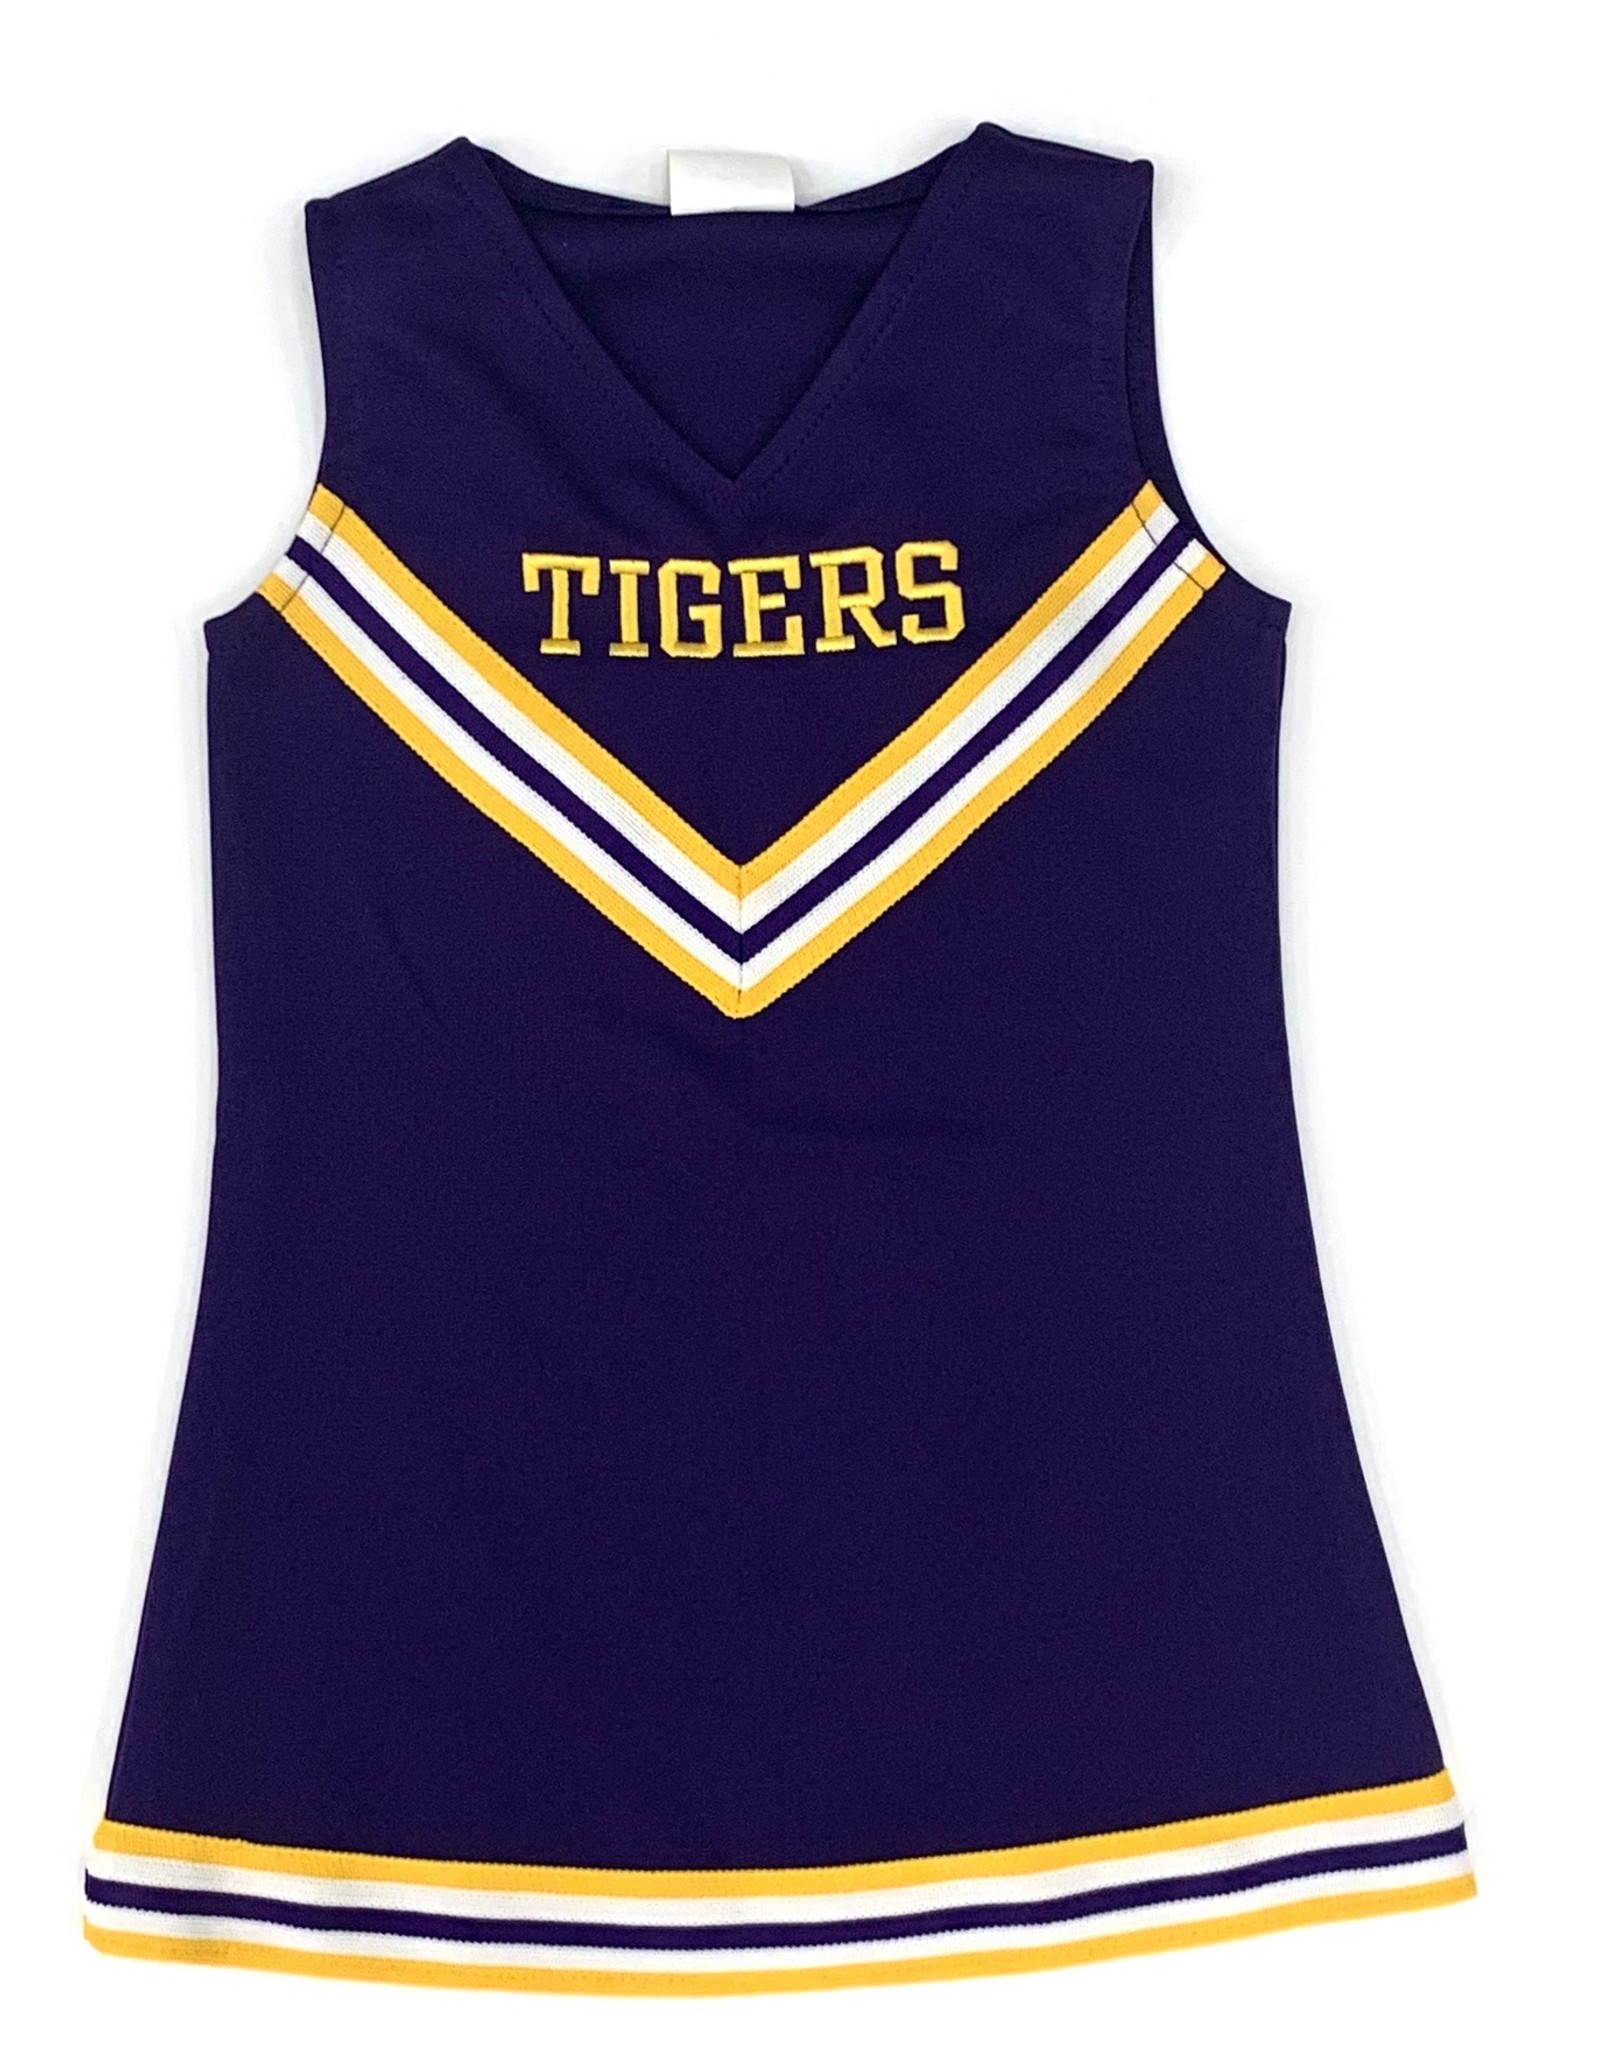 Lets Cheer Purple Cheer Uniform Dress - Tigers